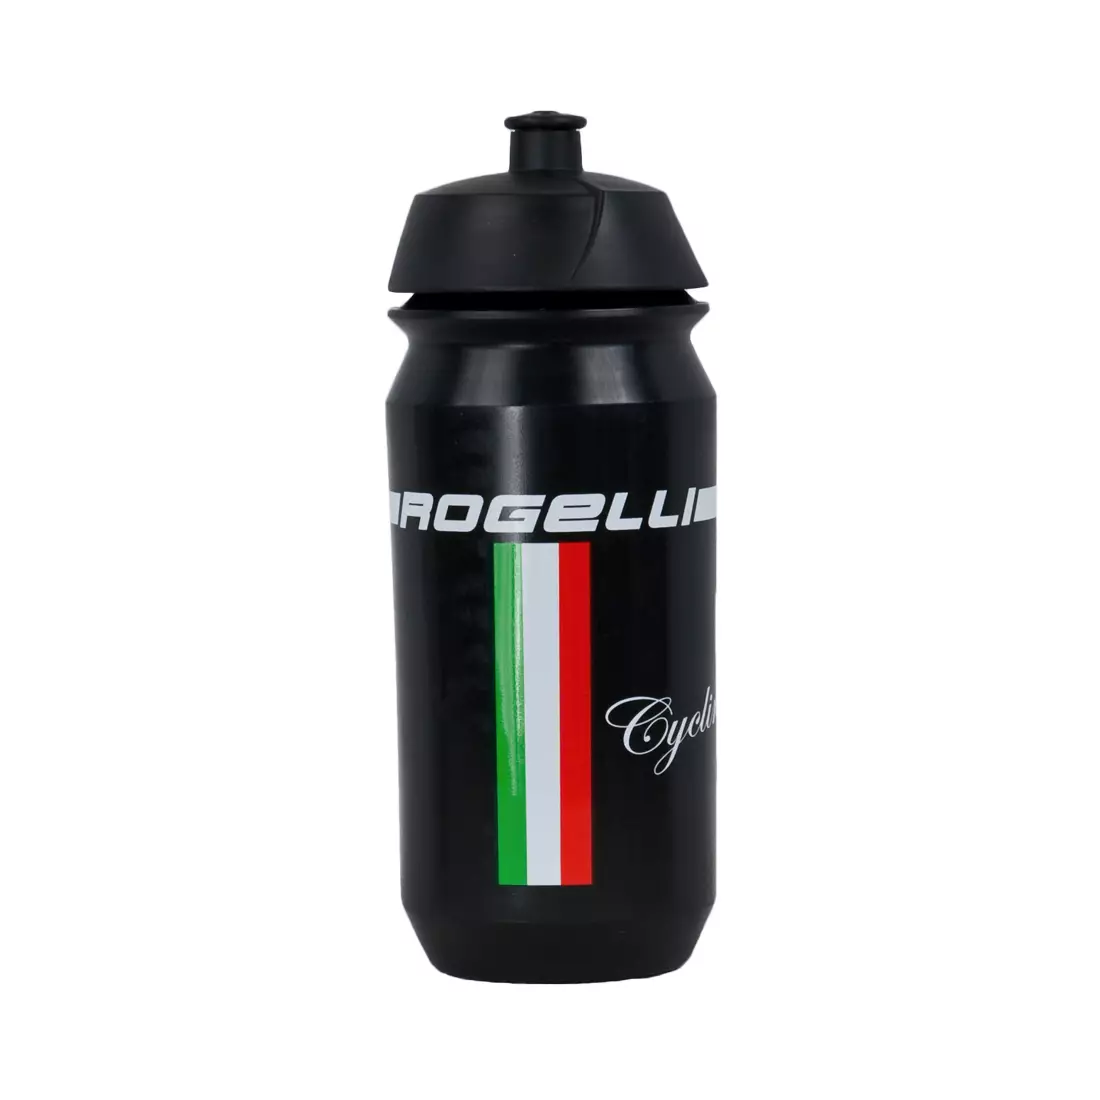 ROGELLI ss18 BIKE - TEAM - bicycle water bottle, color: Black